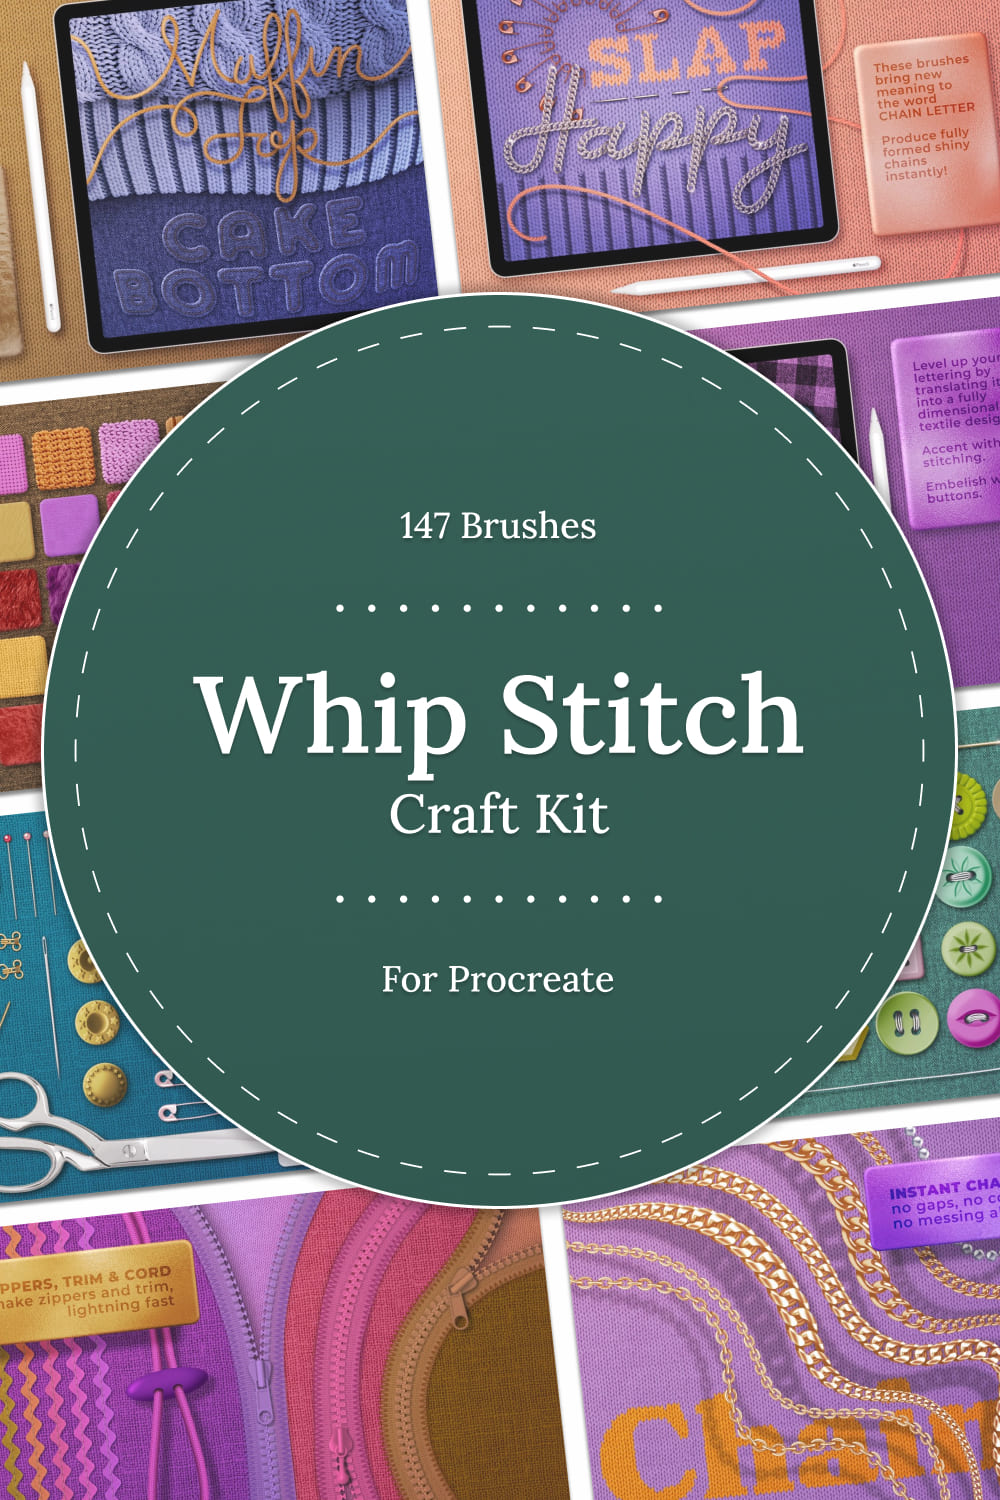 whip stitch craft kit for procreate 02 3